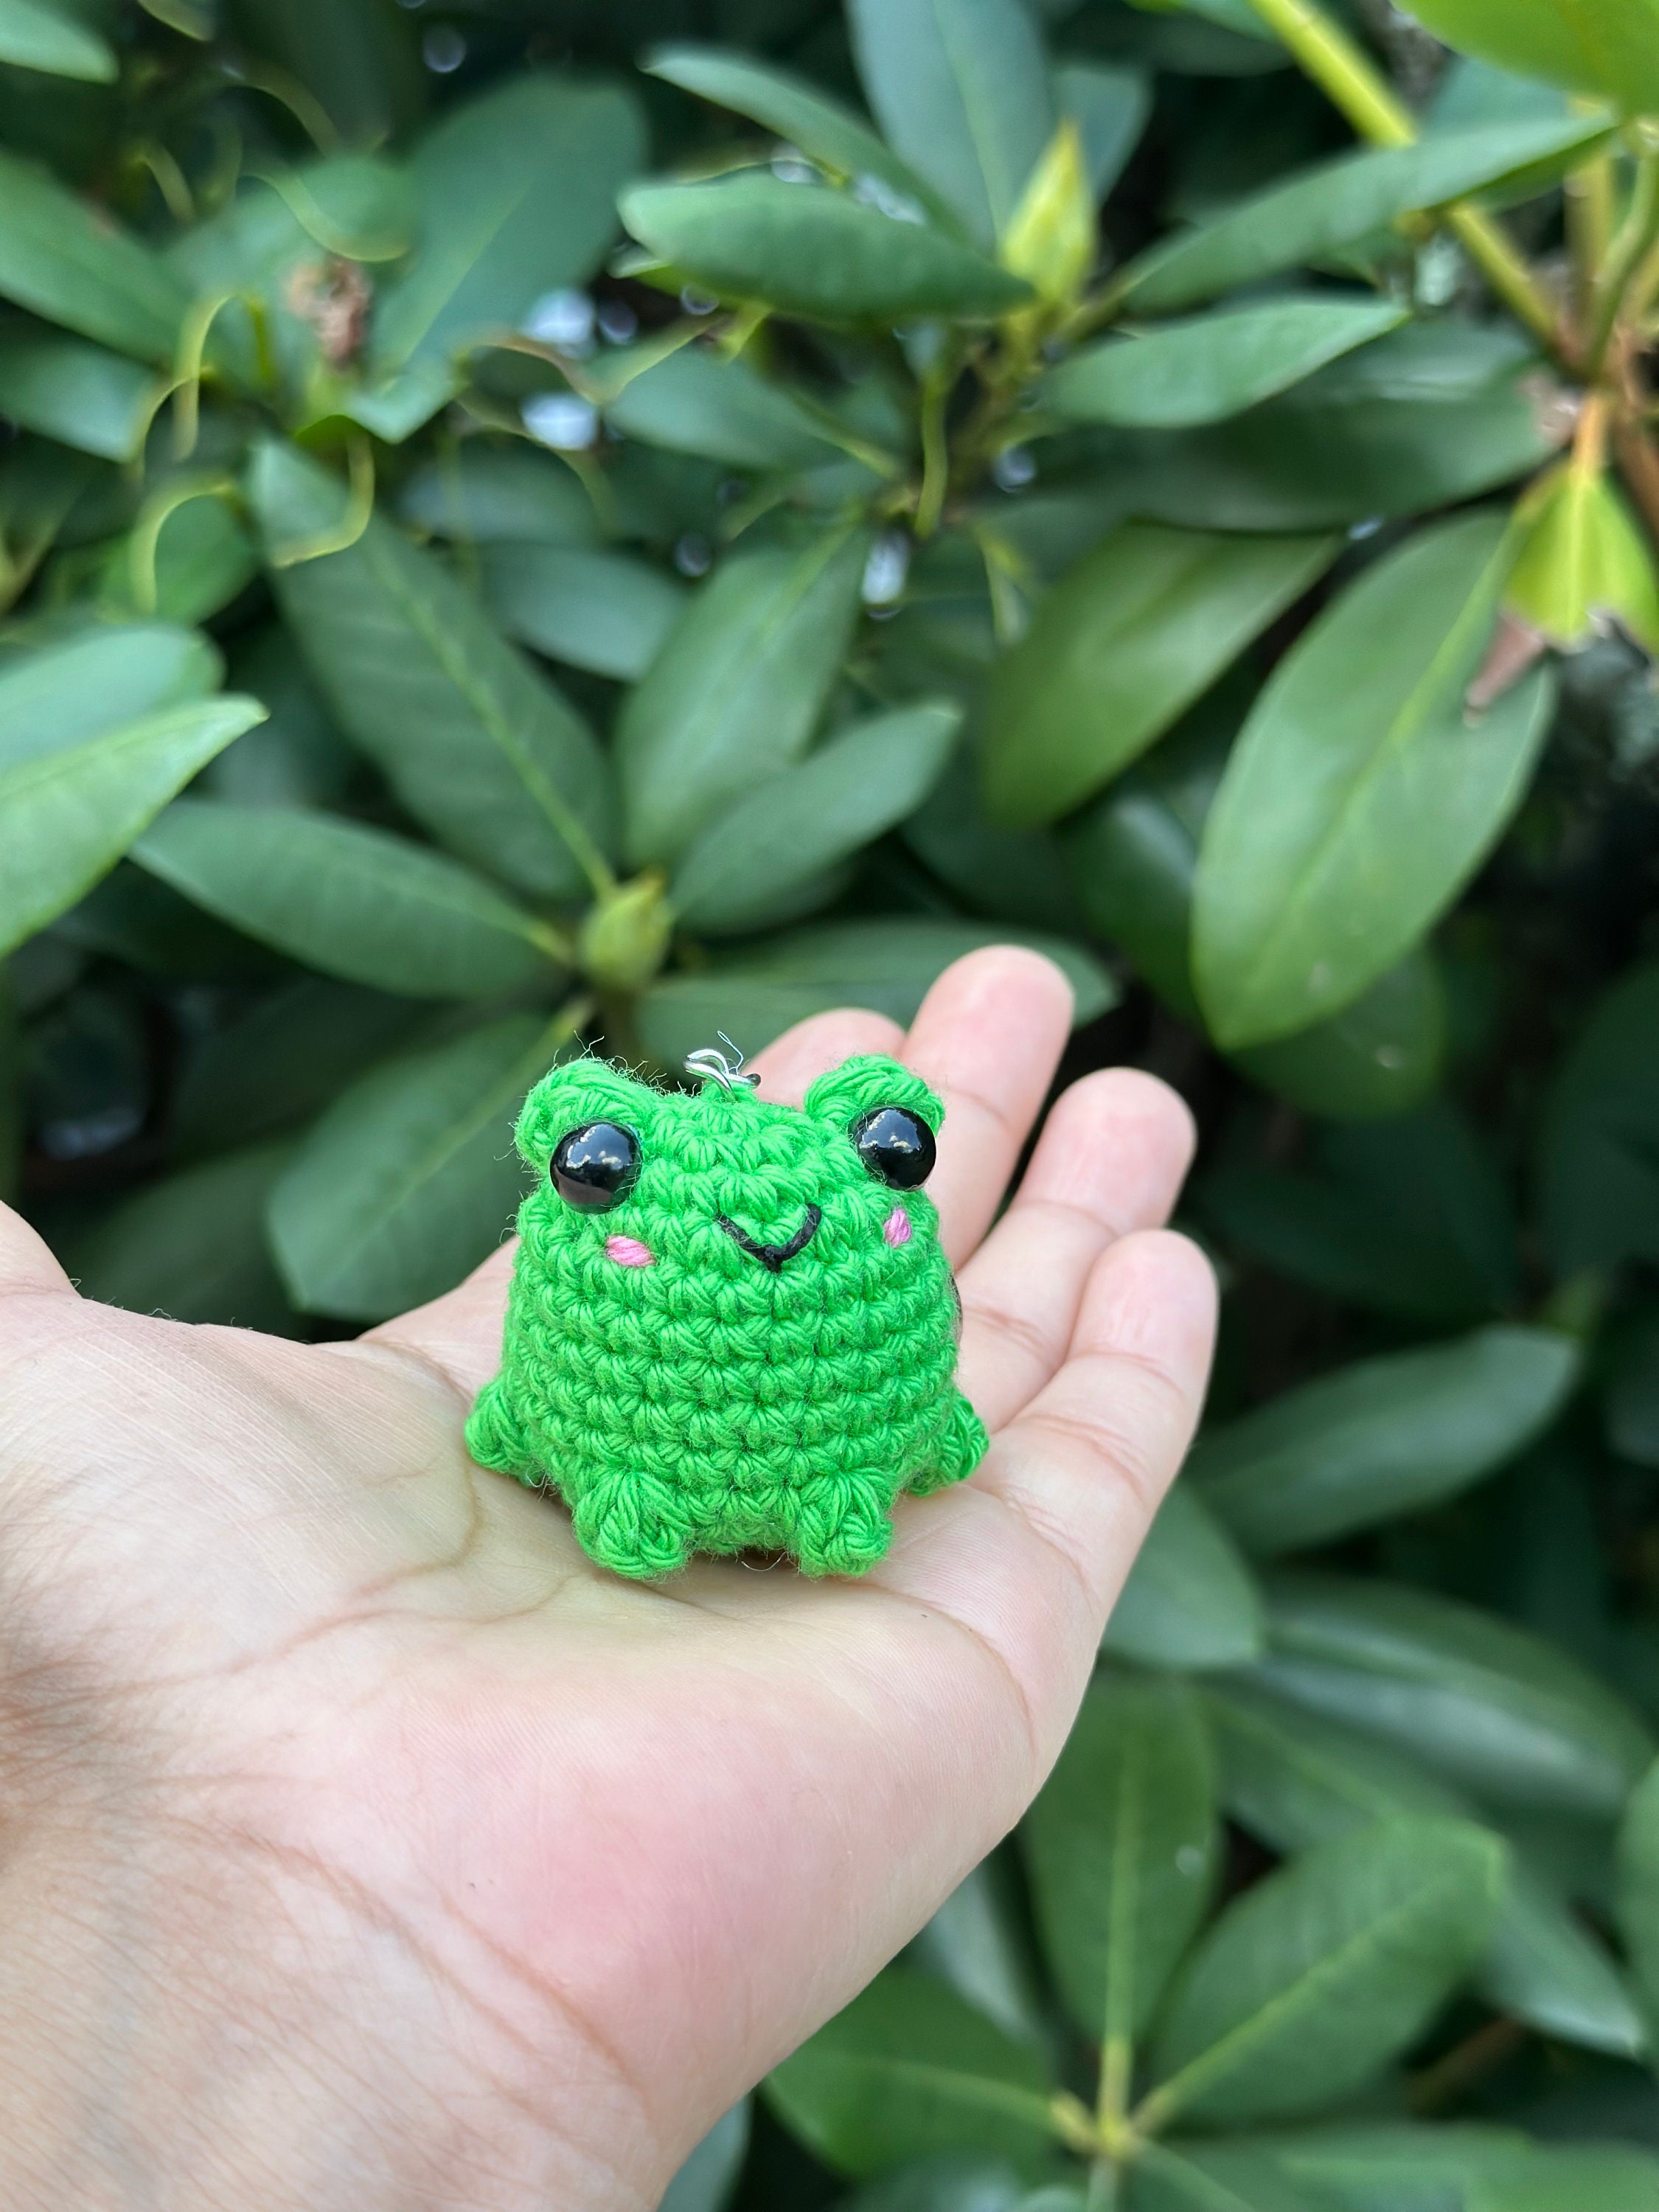 Bead Buddy Keychain Kit - Frog